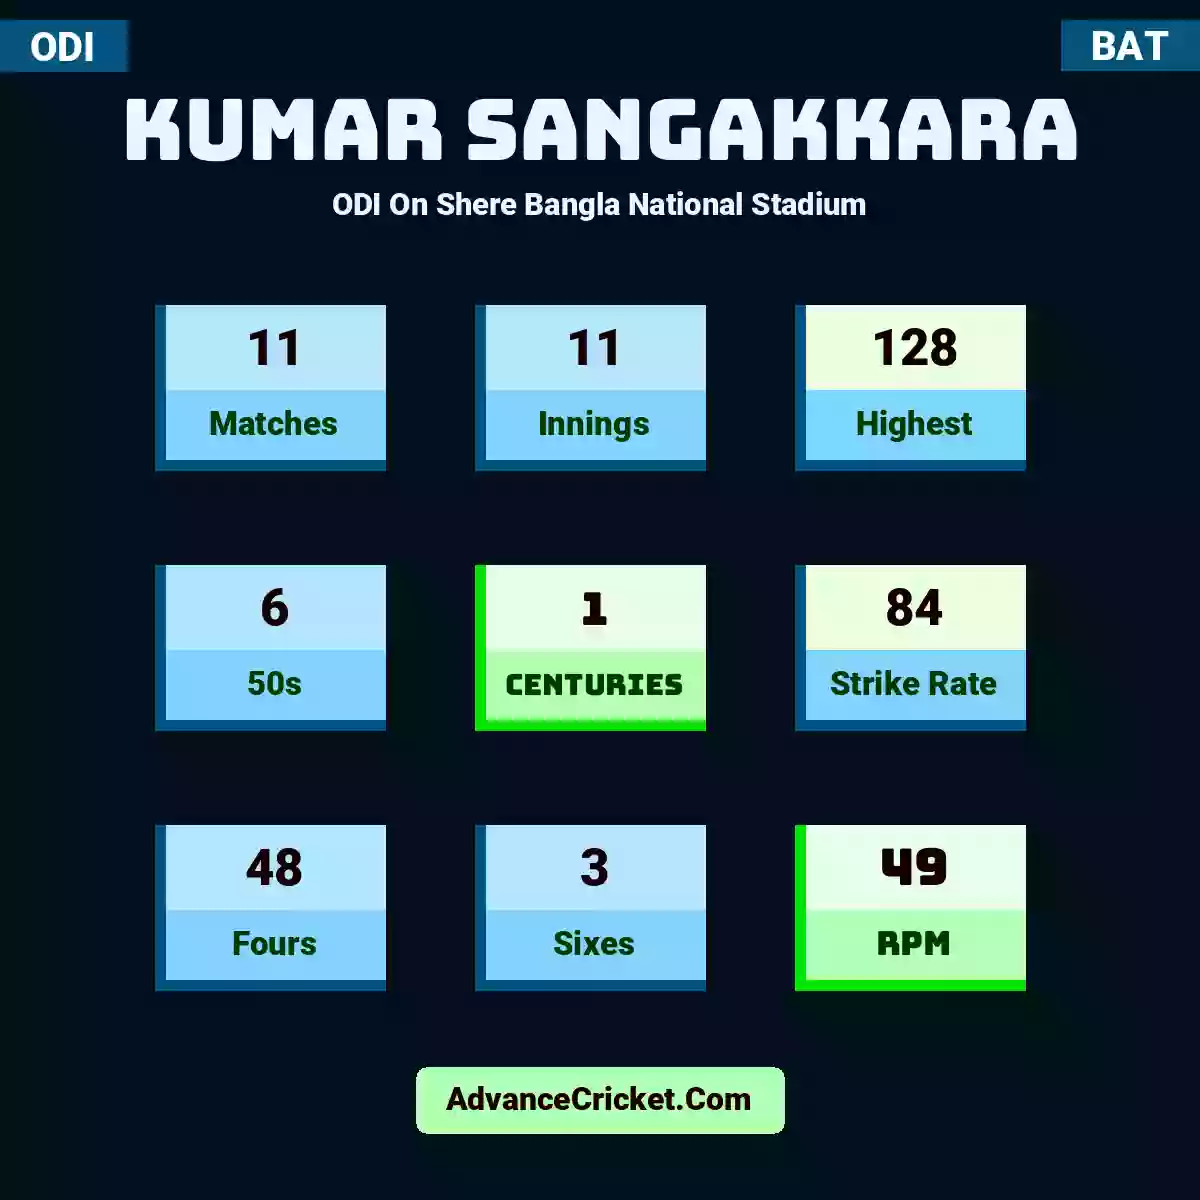 Kumar Sangakkara ODI  On Shere Bangla National Stadium, Kumar Sangakkara played 11 matches, scored 128 runs as highest, 6 half-centuries, and 1 centuries, with a strike rate of 84. K.Sangakkara hit 48 fours and 3 sixes, with an RPM of 49.